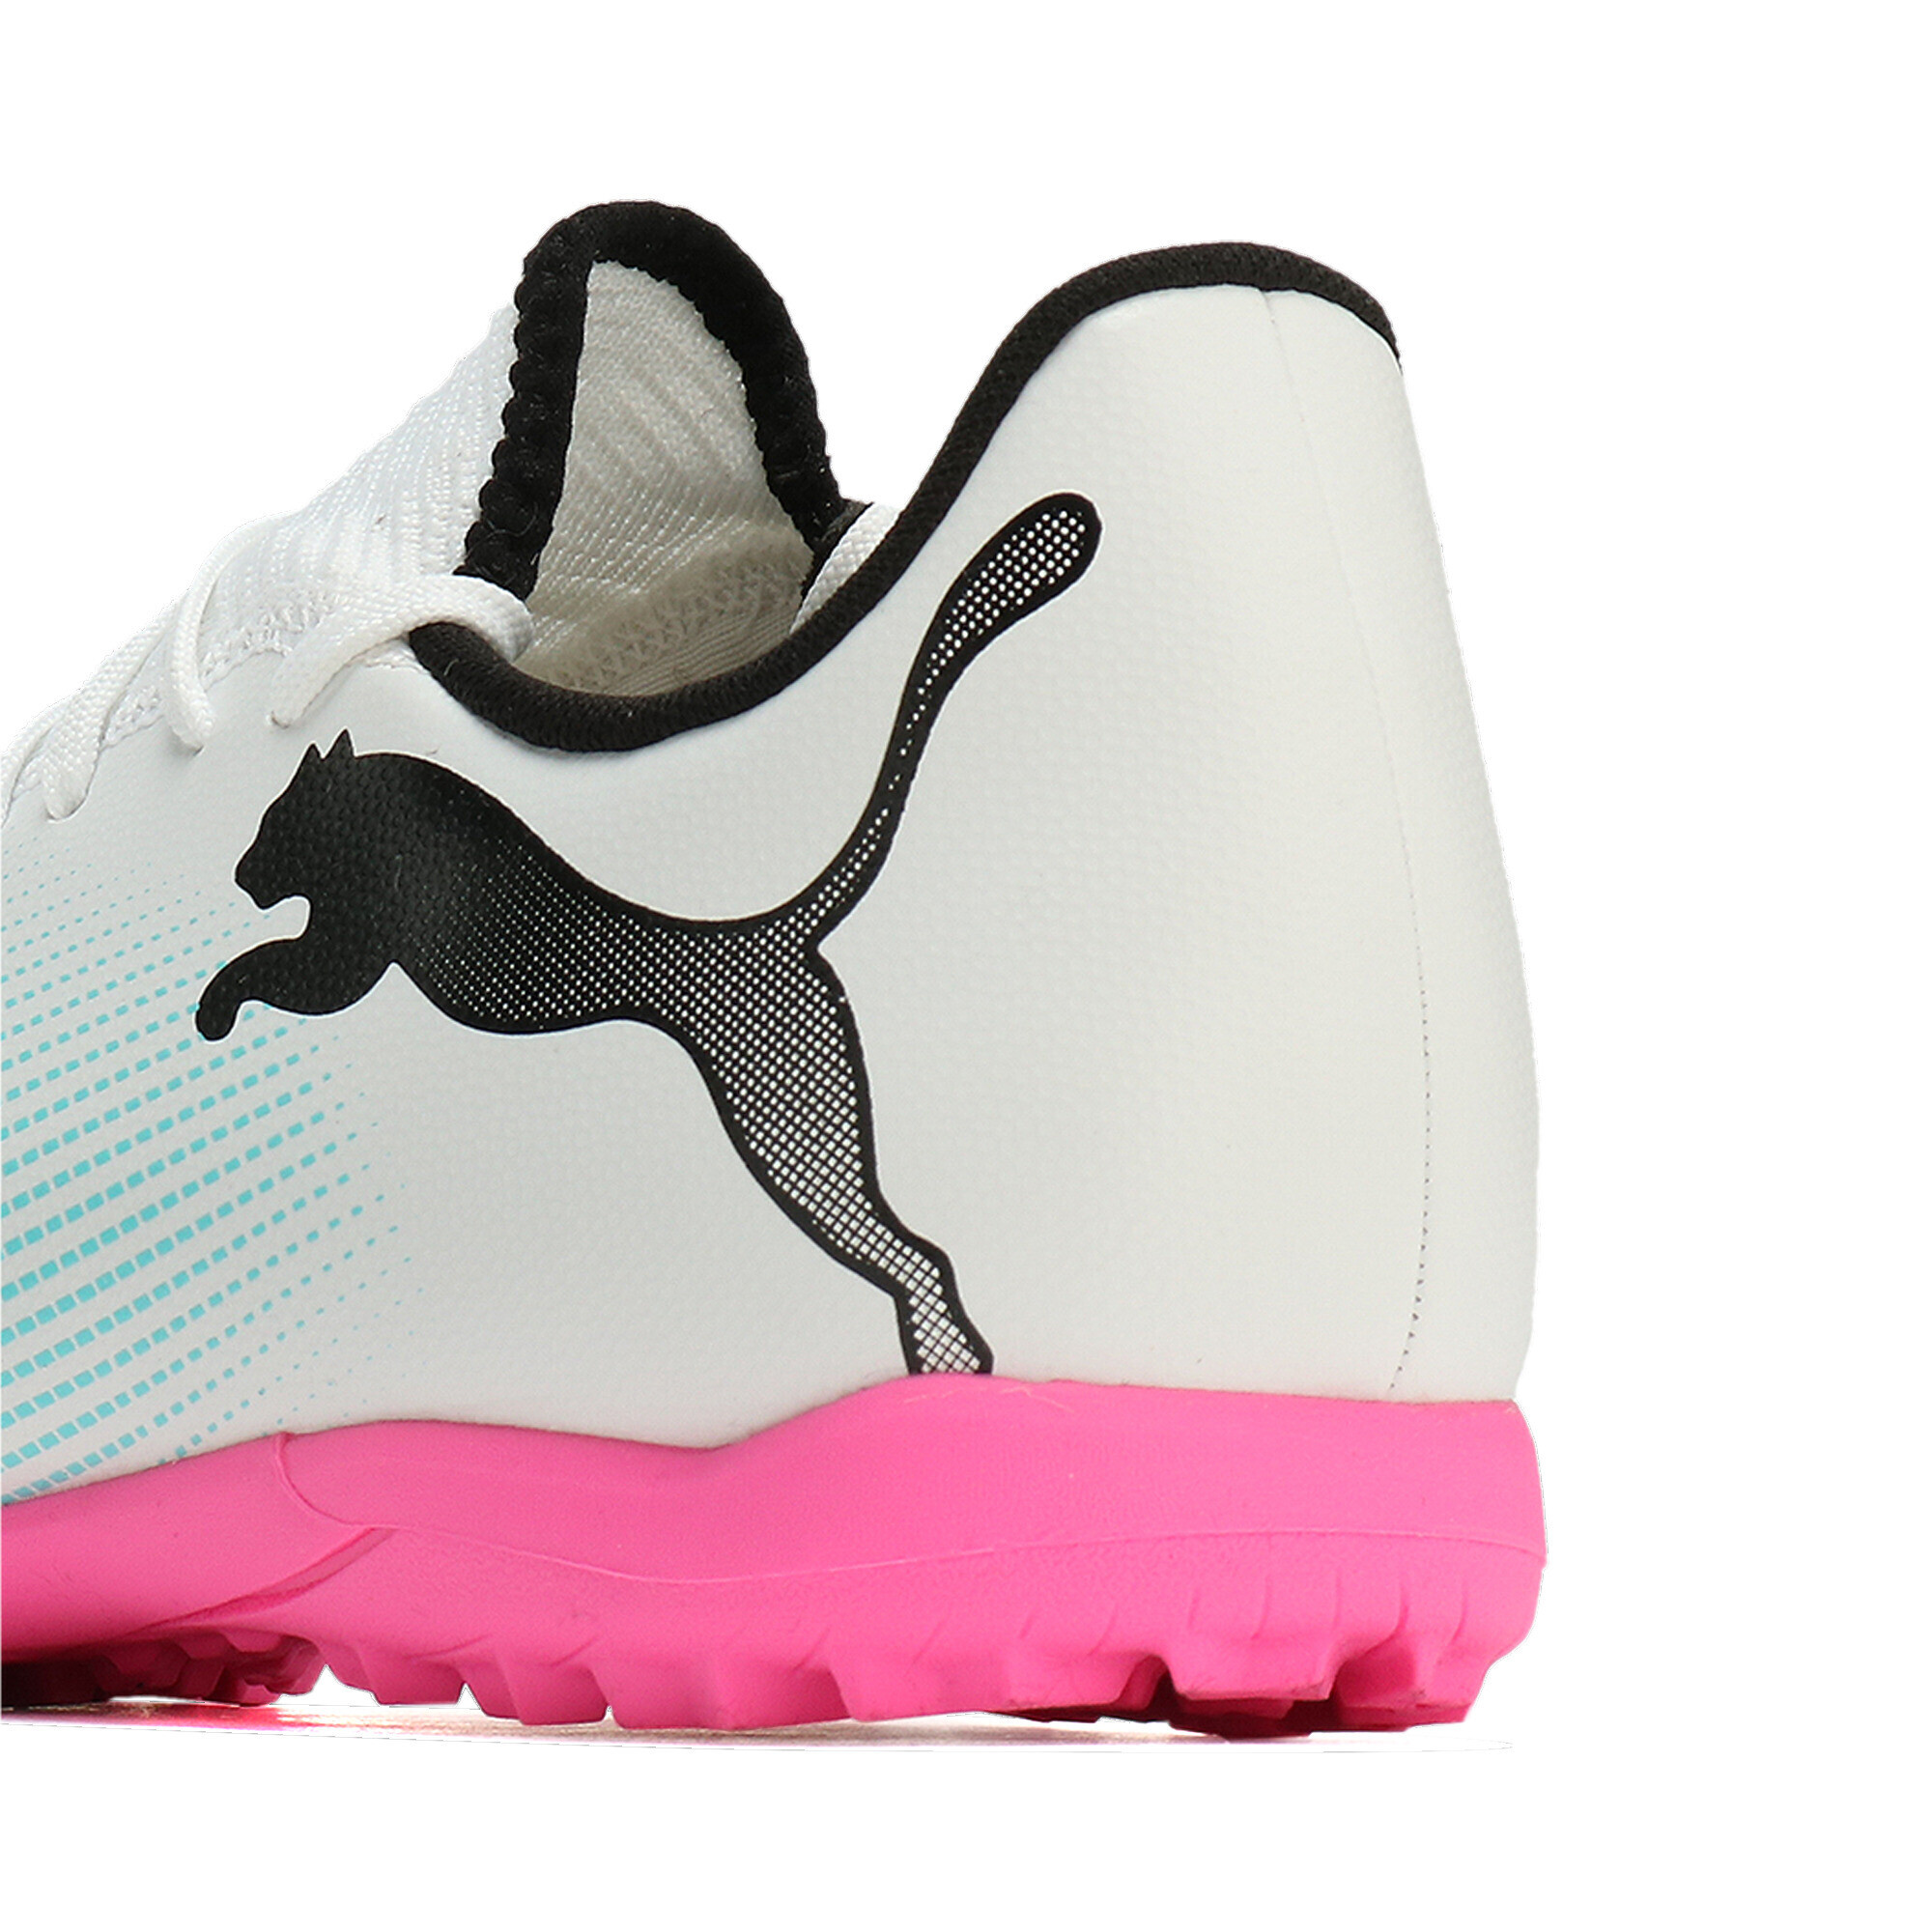 Men's PUMA FUTURE 7 PLAY TT Football Boots In White/Pink, Size EU 39